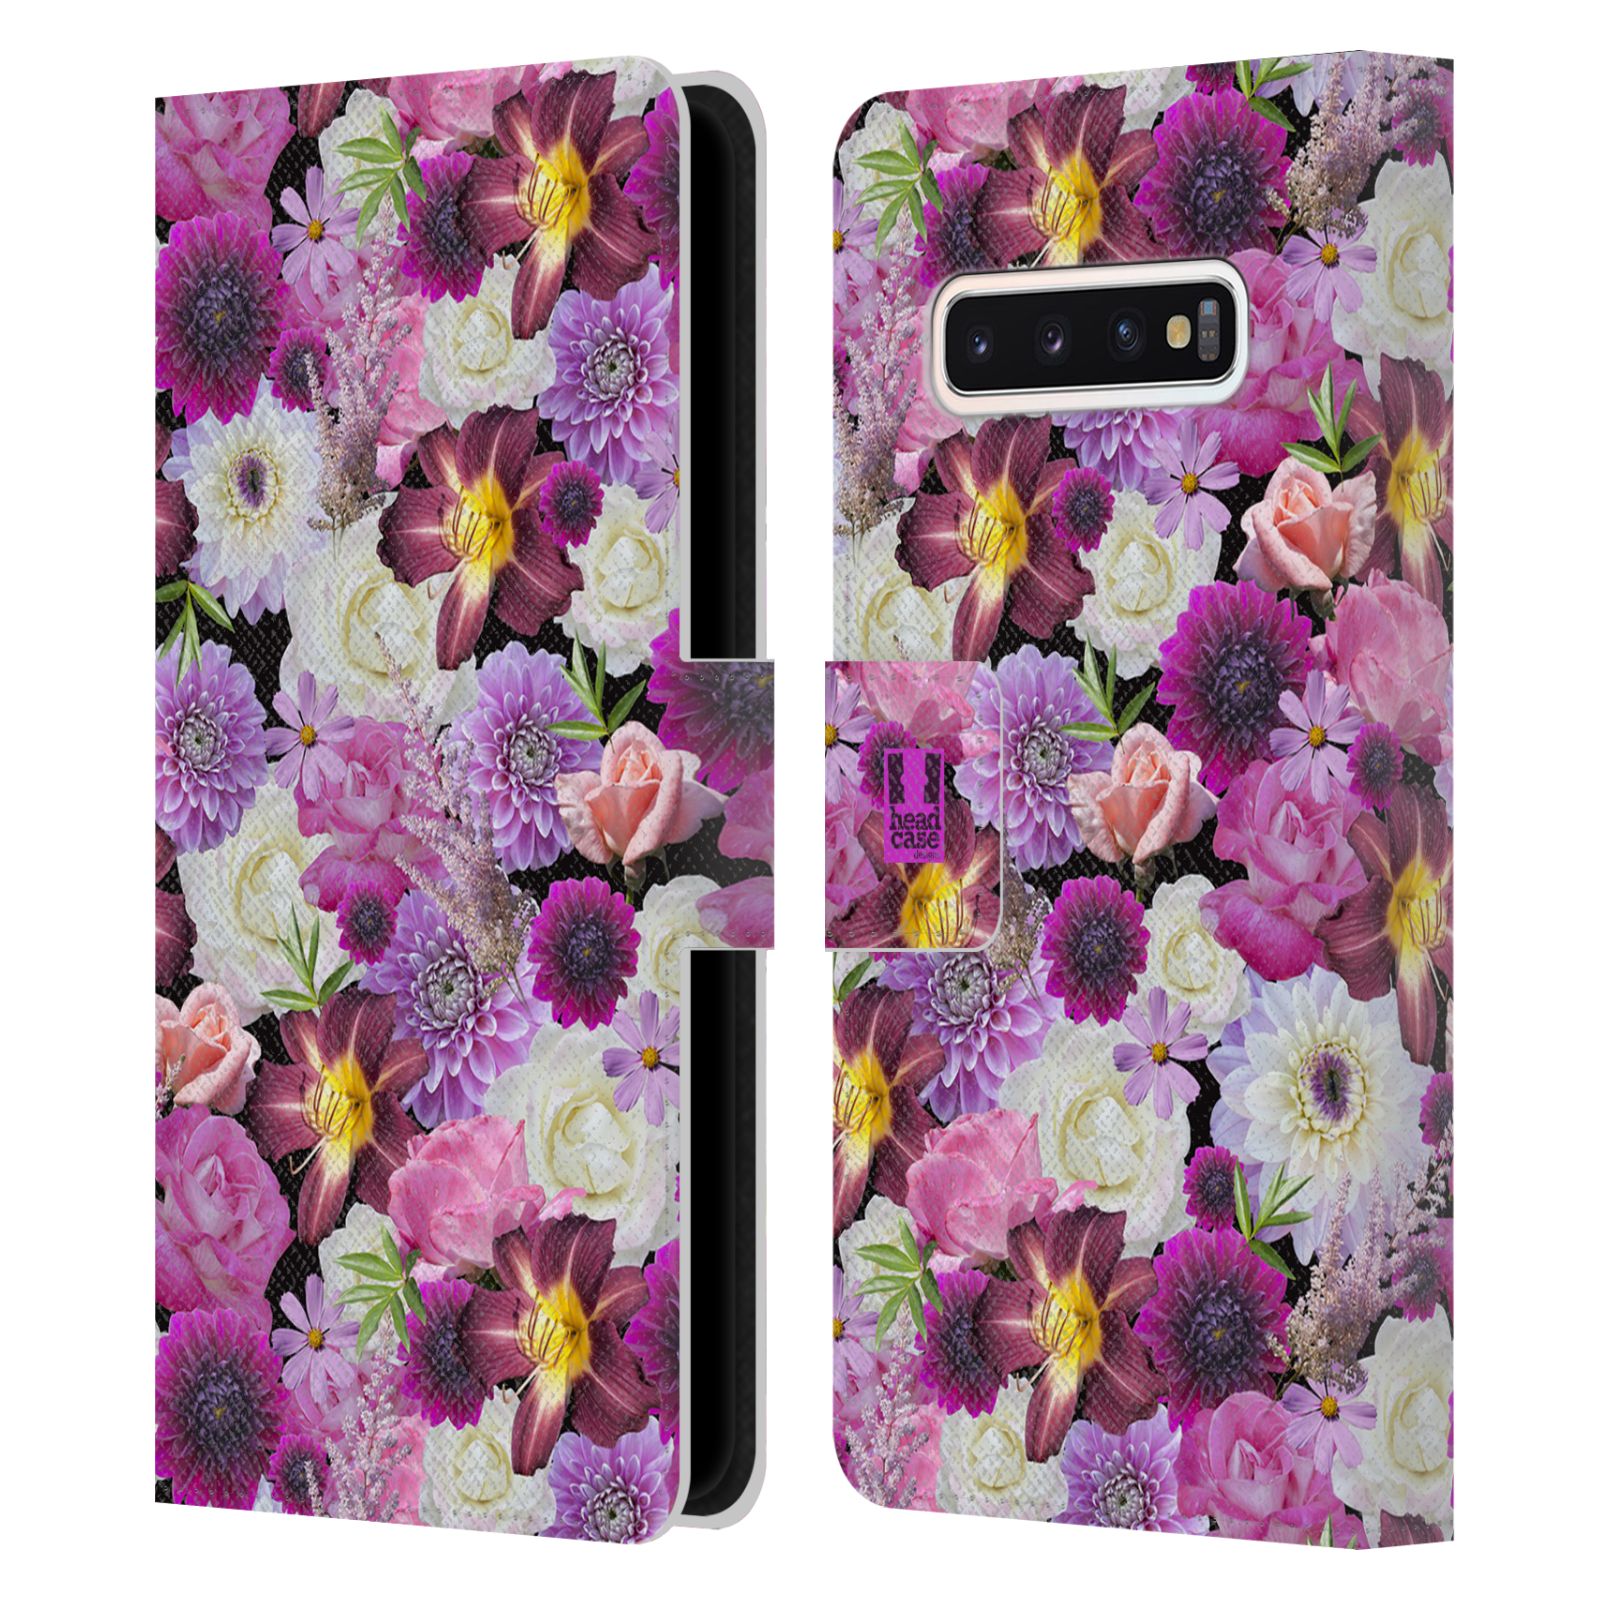 Pouzdro HEAD CASE na mobil Samsung Galaxy S10 květy foto fialová a bílá